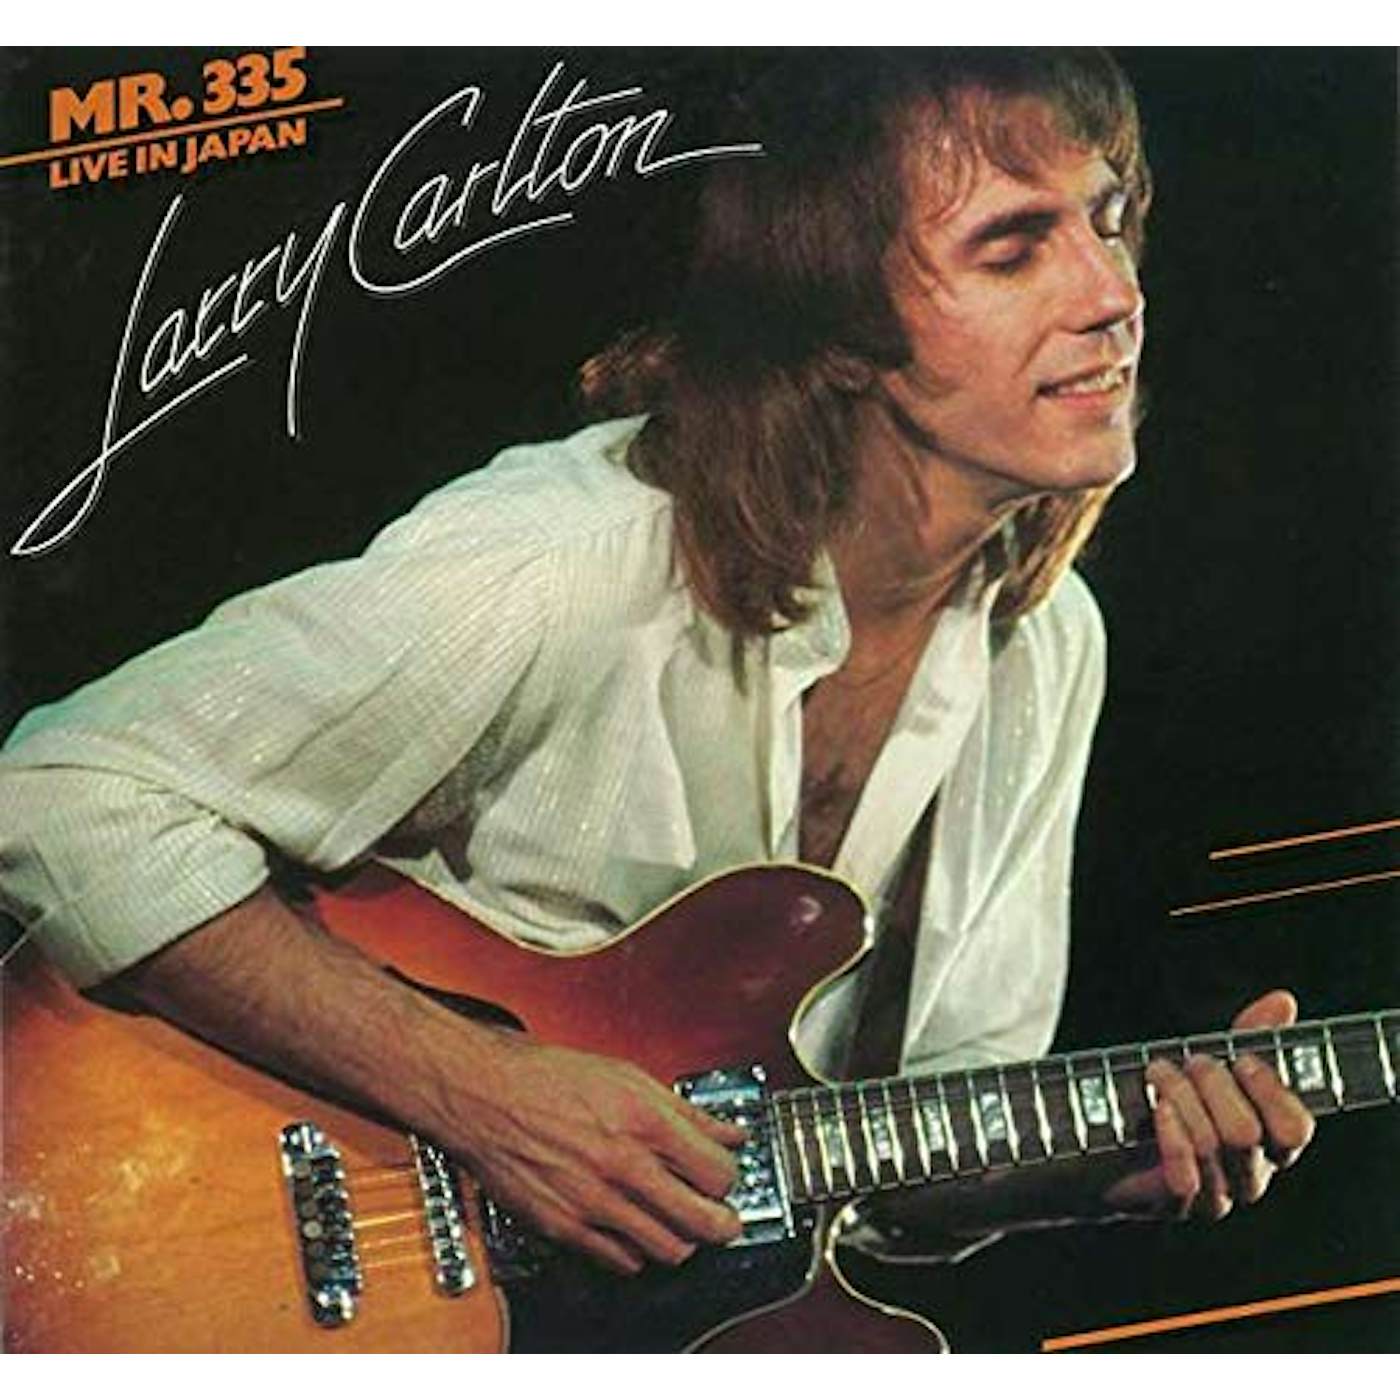 Larry Carlton MR 335 LIVE IN JAPAN Vinyl Record